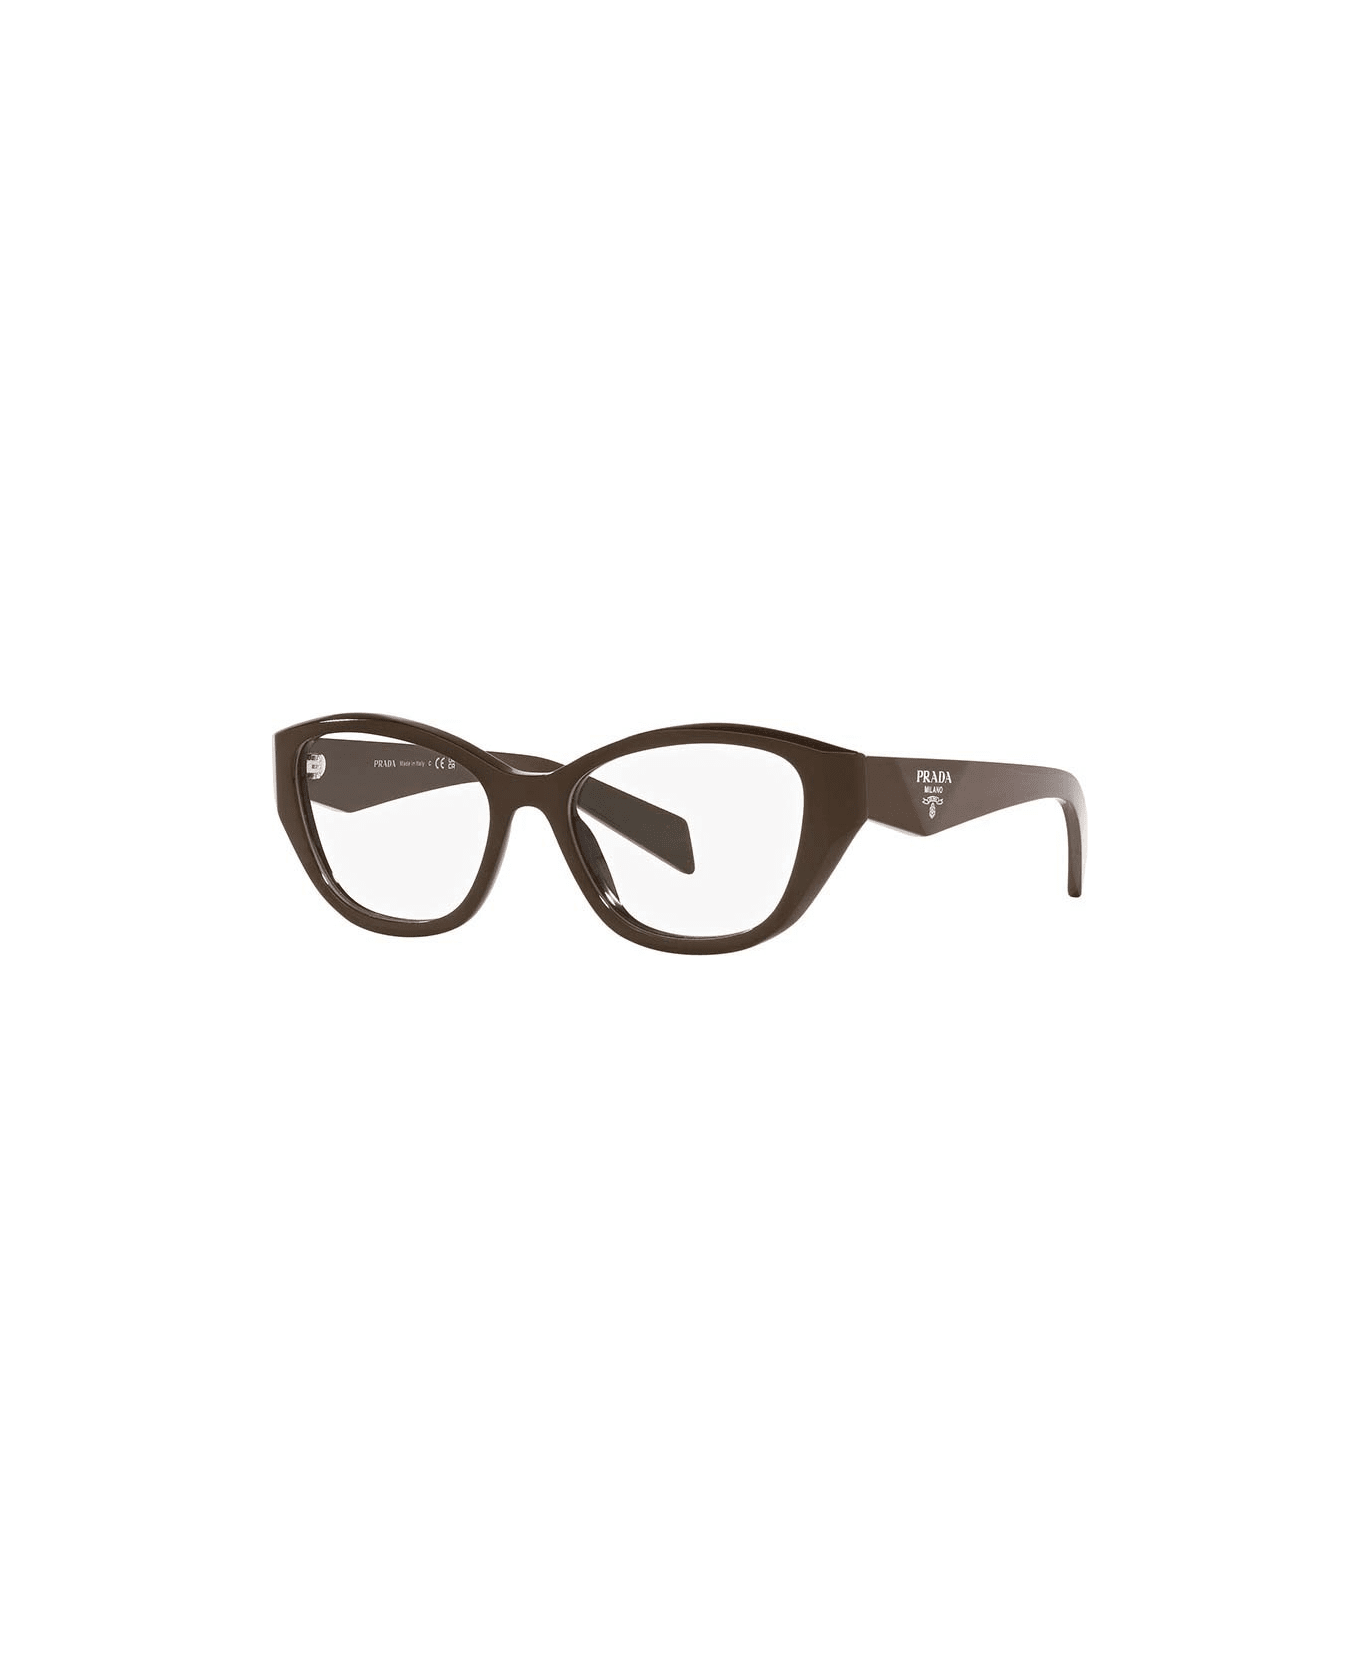 Prada Eyewear Glasses - 15L1O1